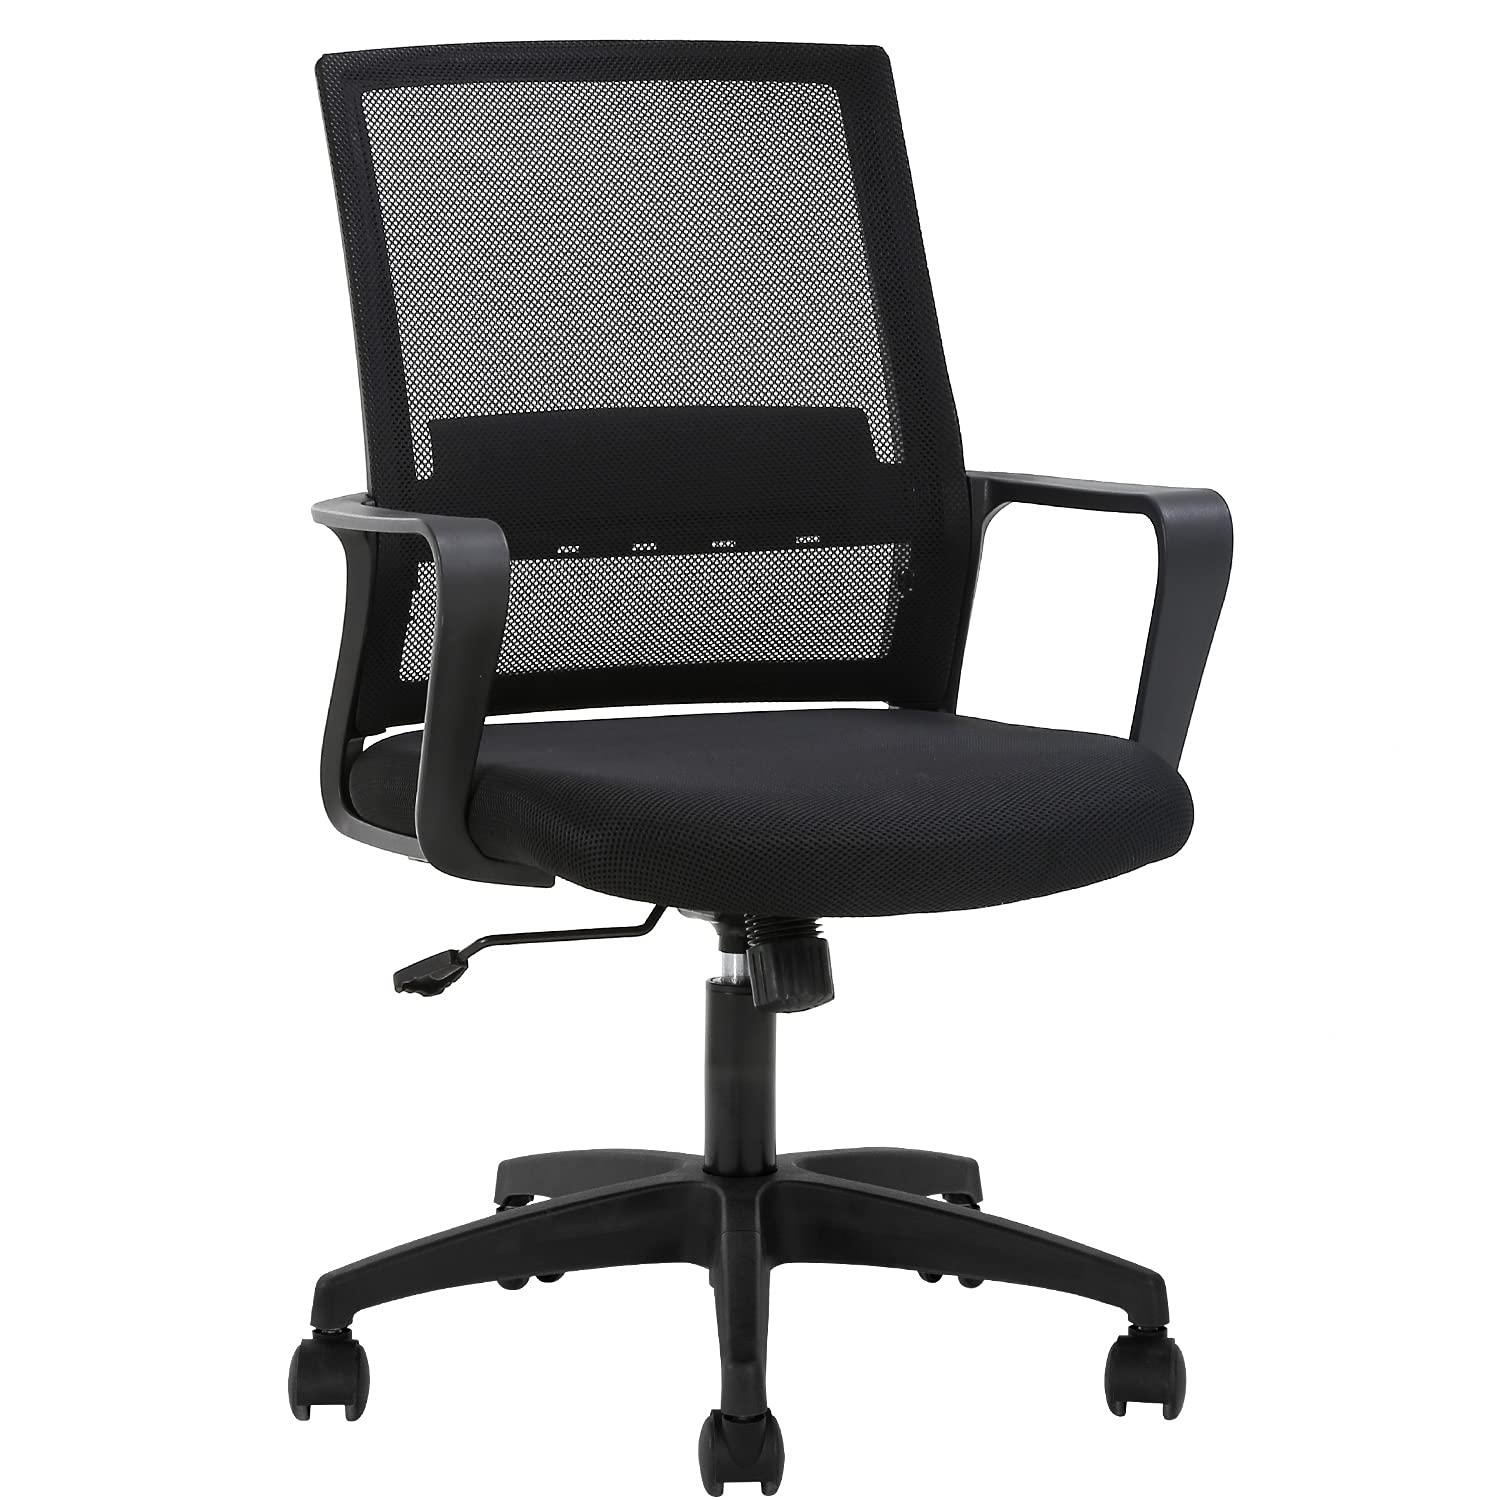  Home Office Chair Ergonomic Desk Chair Mesh Computer